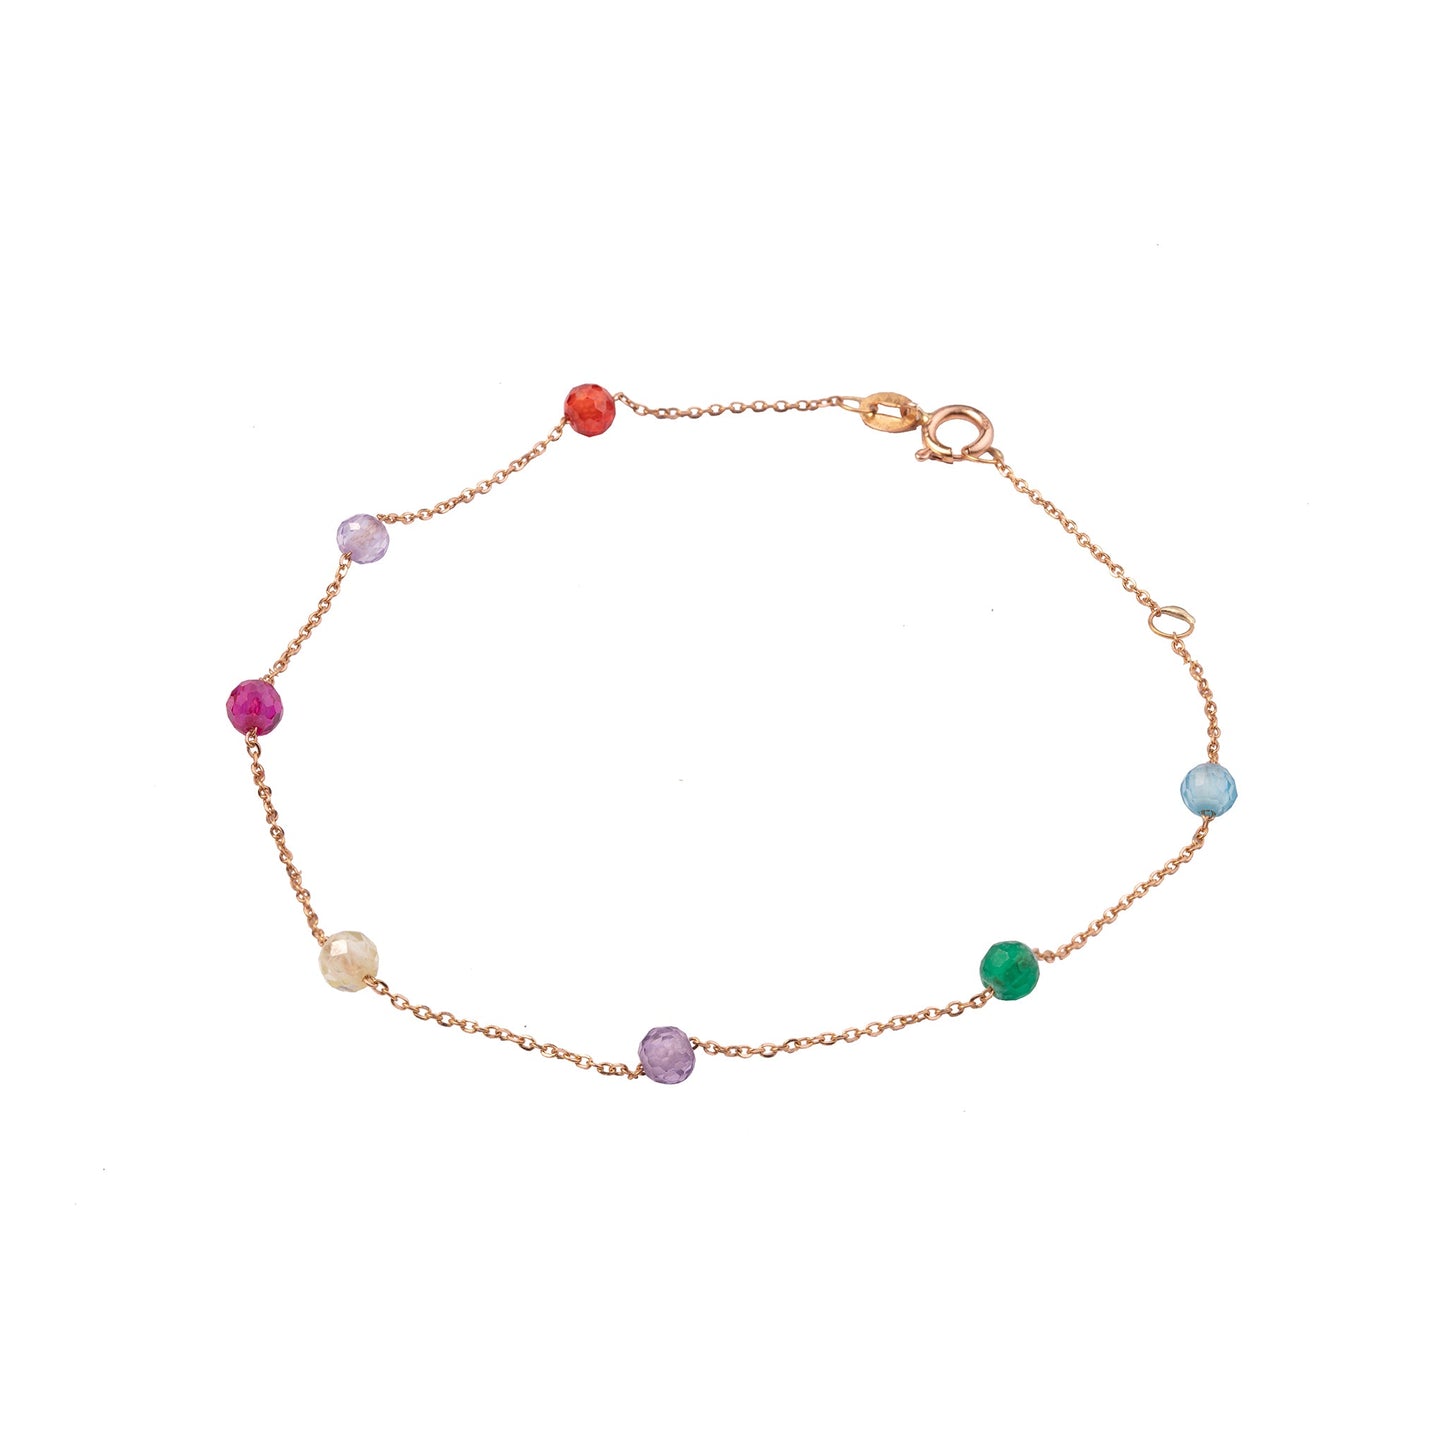 The rainbow anklet - Oria.jewelry